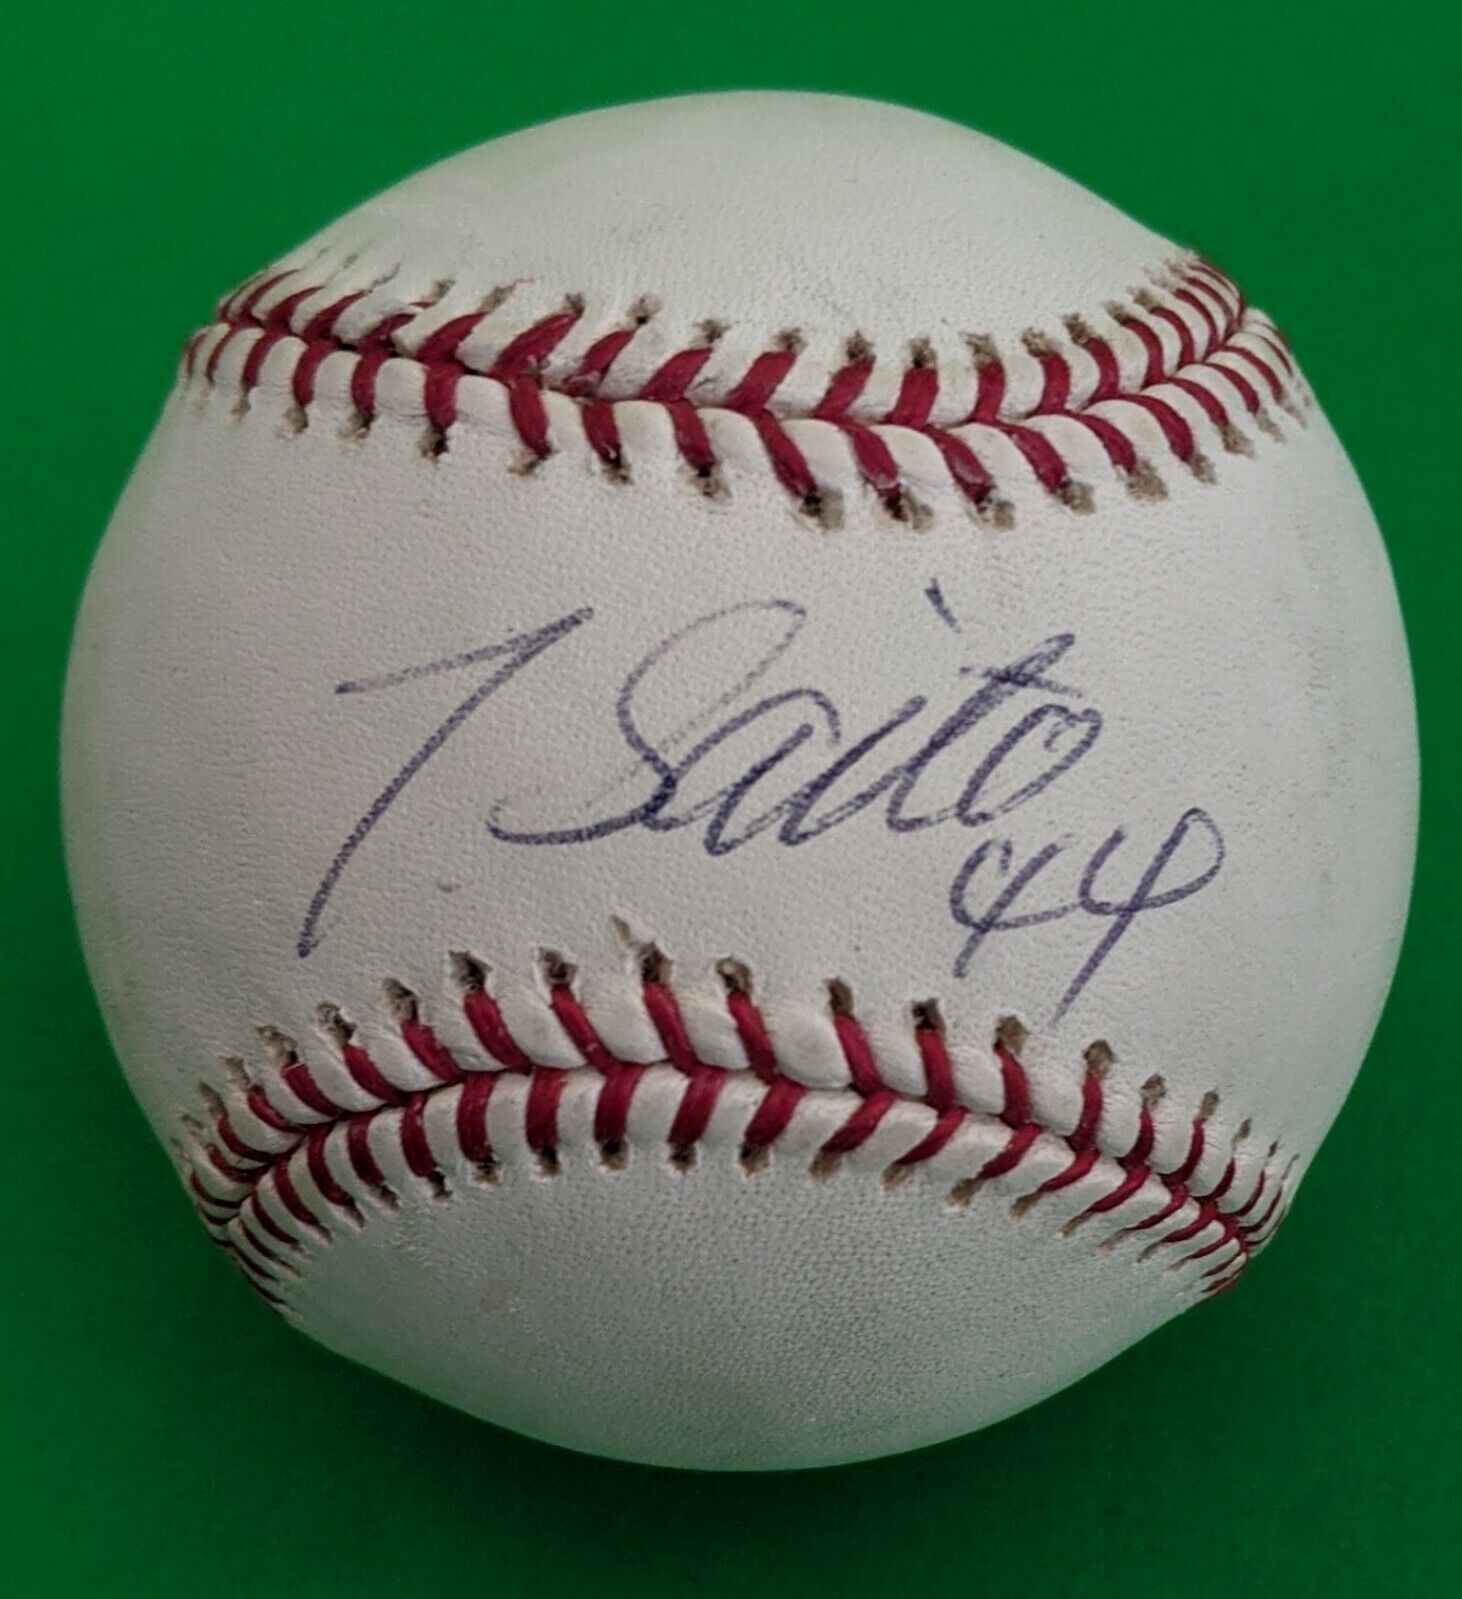 Takashi Saito LA Dodgers and Boston Red Sox  signed baseball PSA